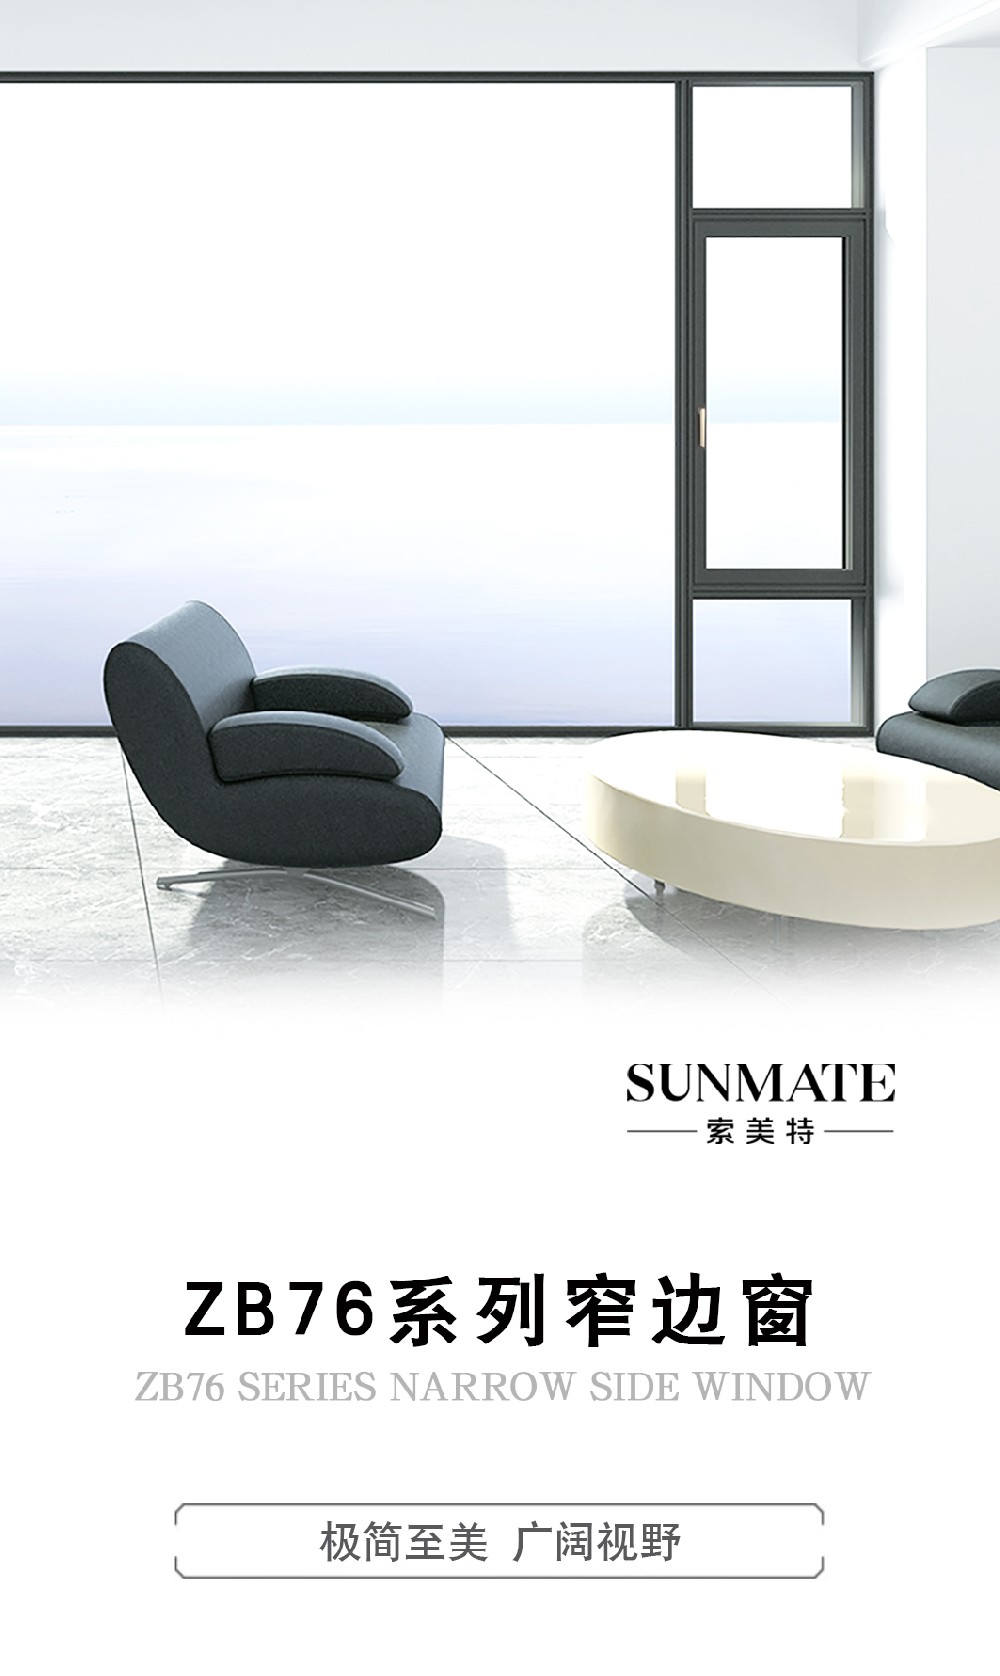 Sunmate新品鉴赏 | 极简至美 广阔视野 ZB76窄边窗